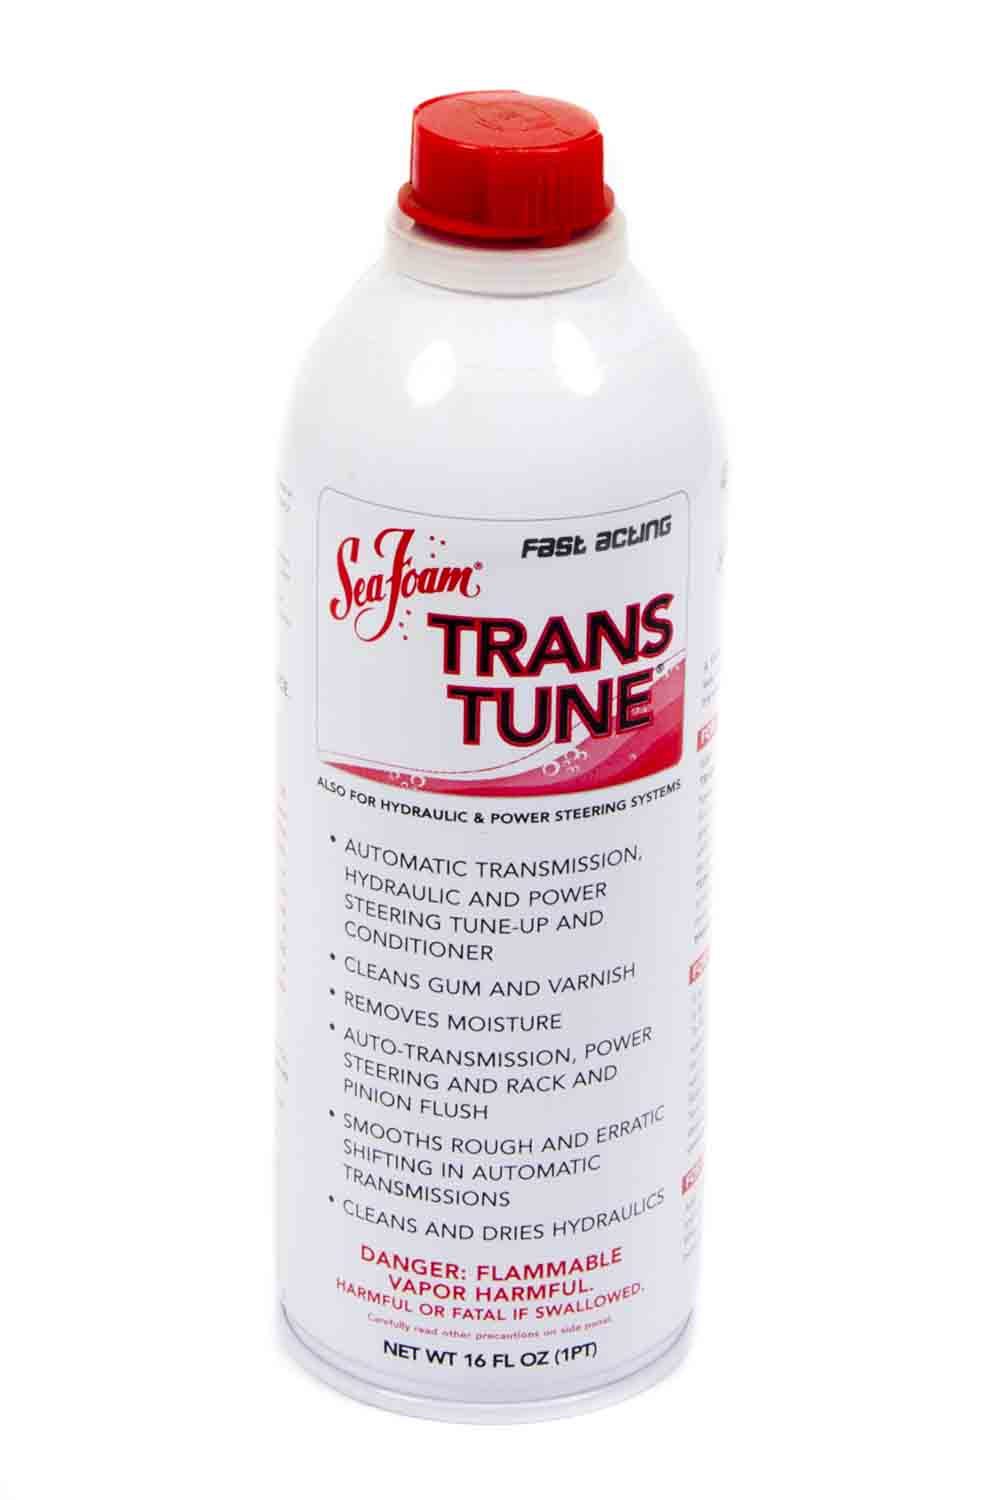 ATP Chemicals & Supplies Transmission Fluid Additive, Sea Foam Trans Tune, 16.00 oz Bottle, Each